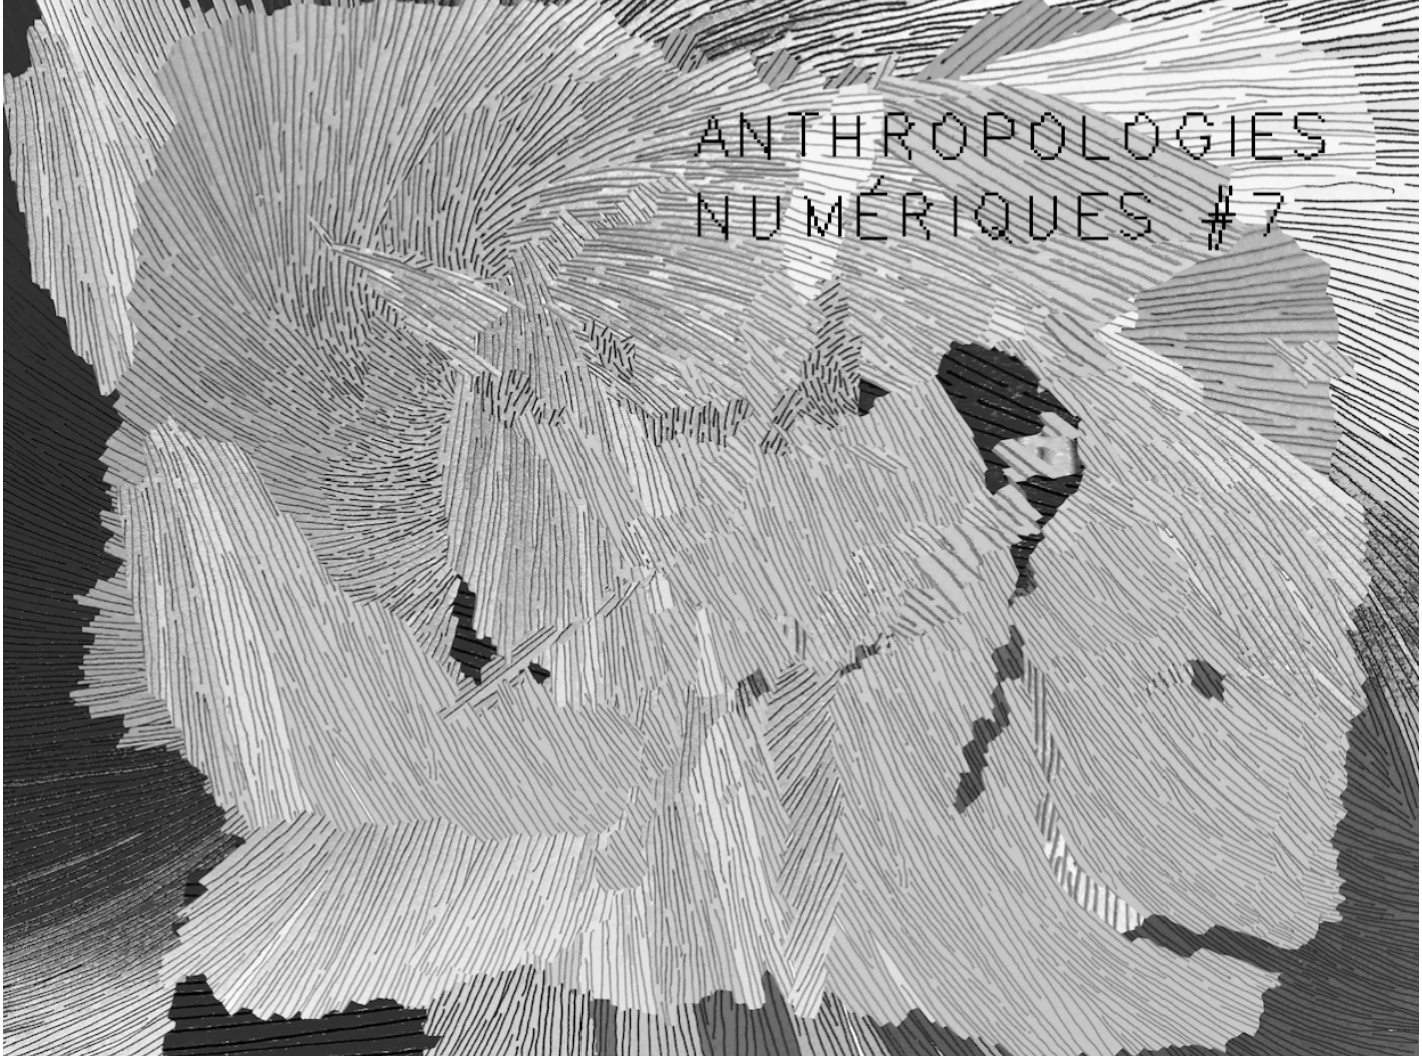 Digital Anthropologies #7